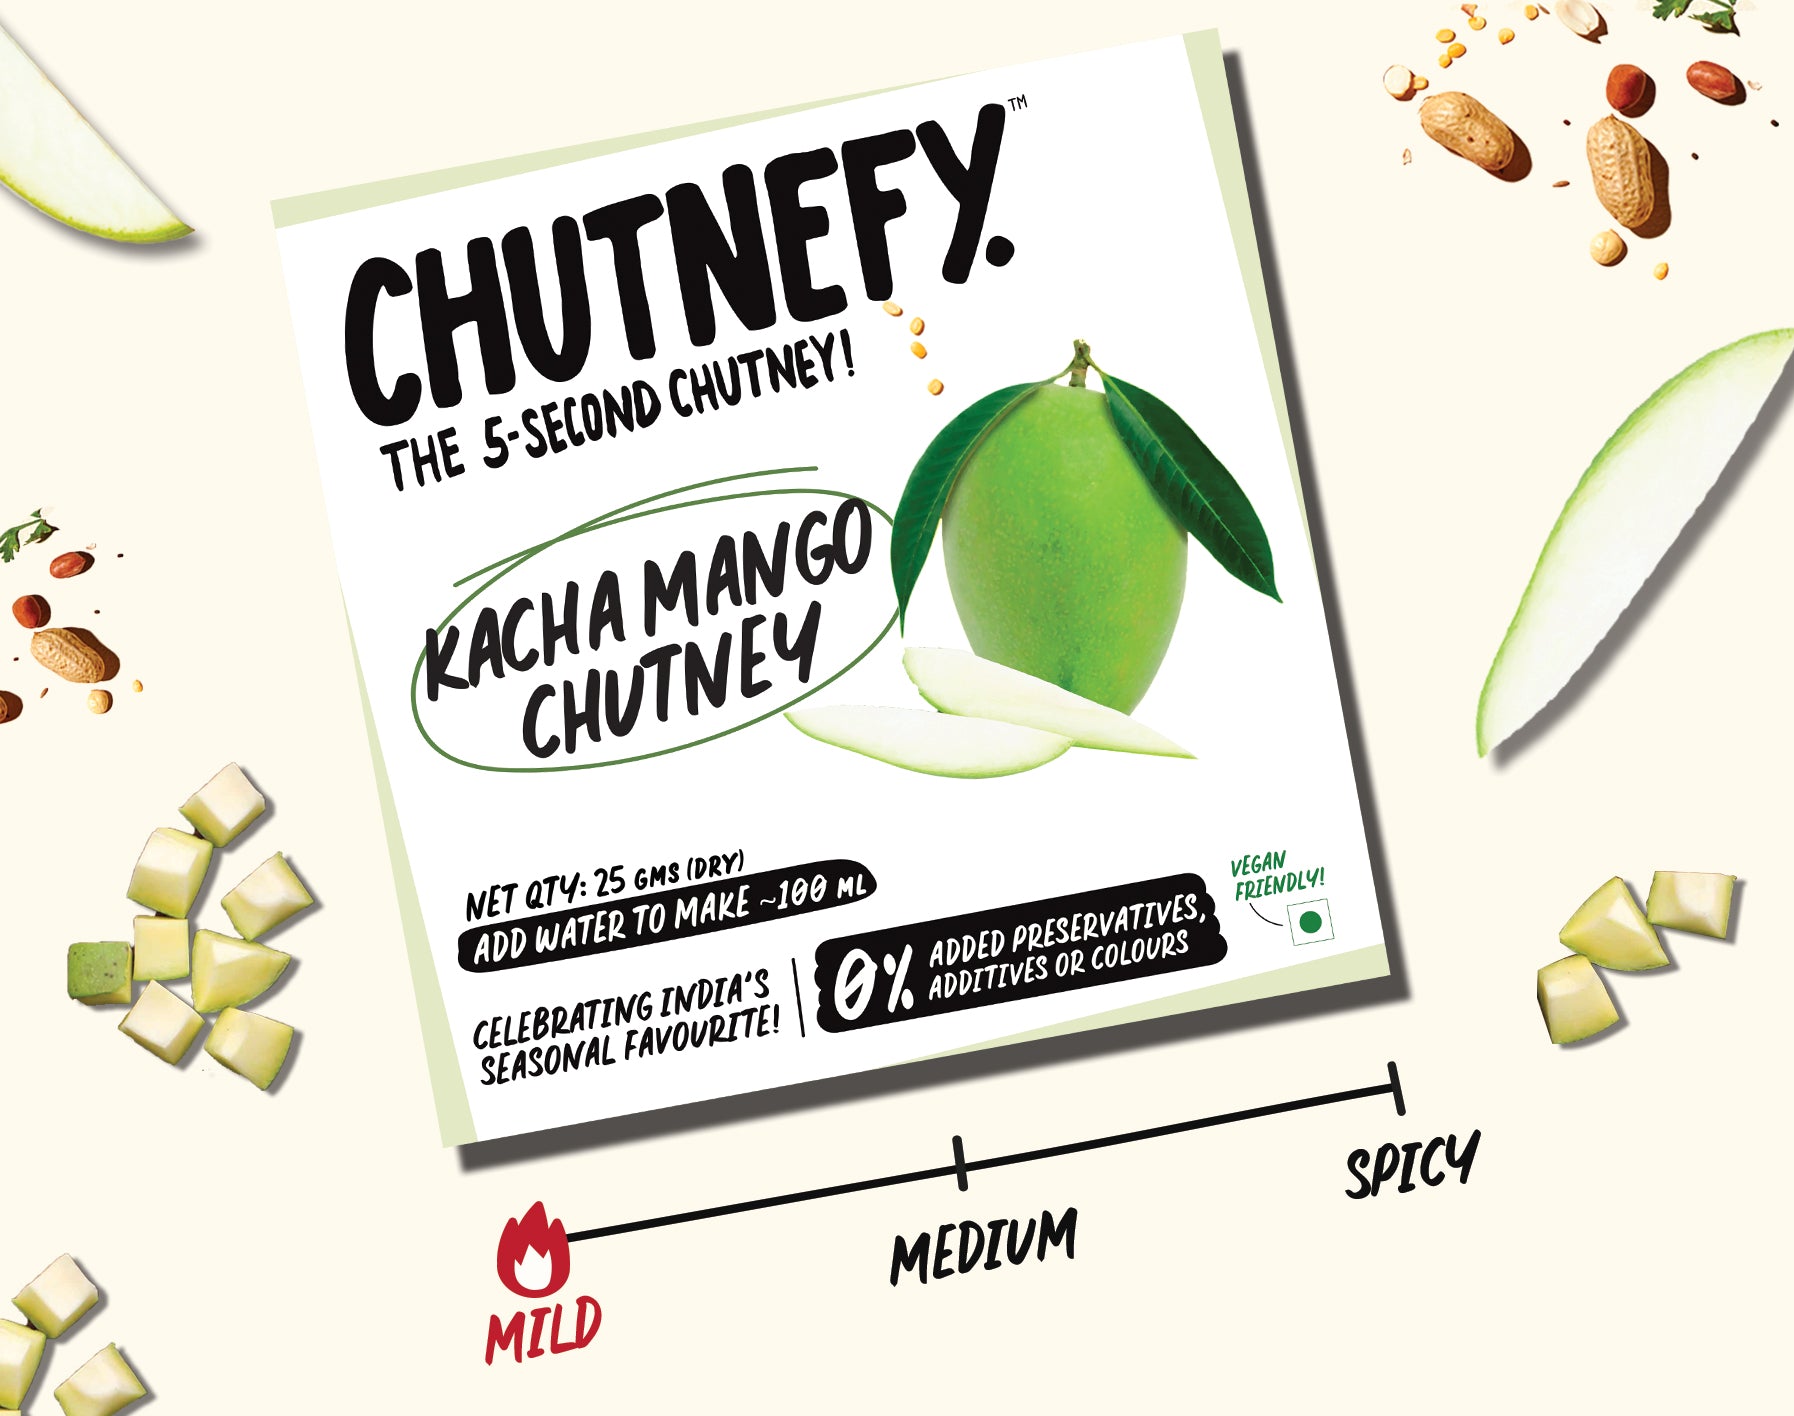 Kacha Mango Chutney | Mild